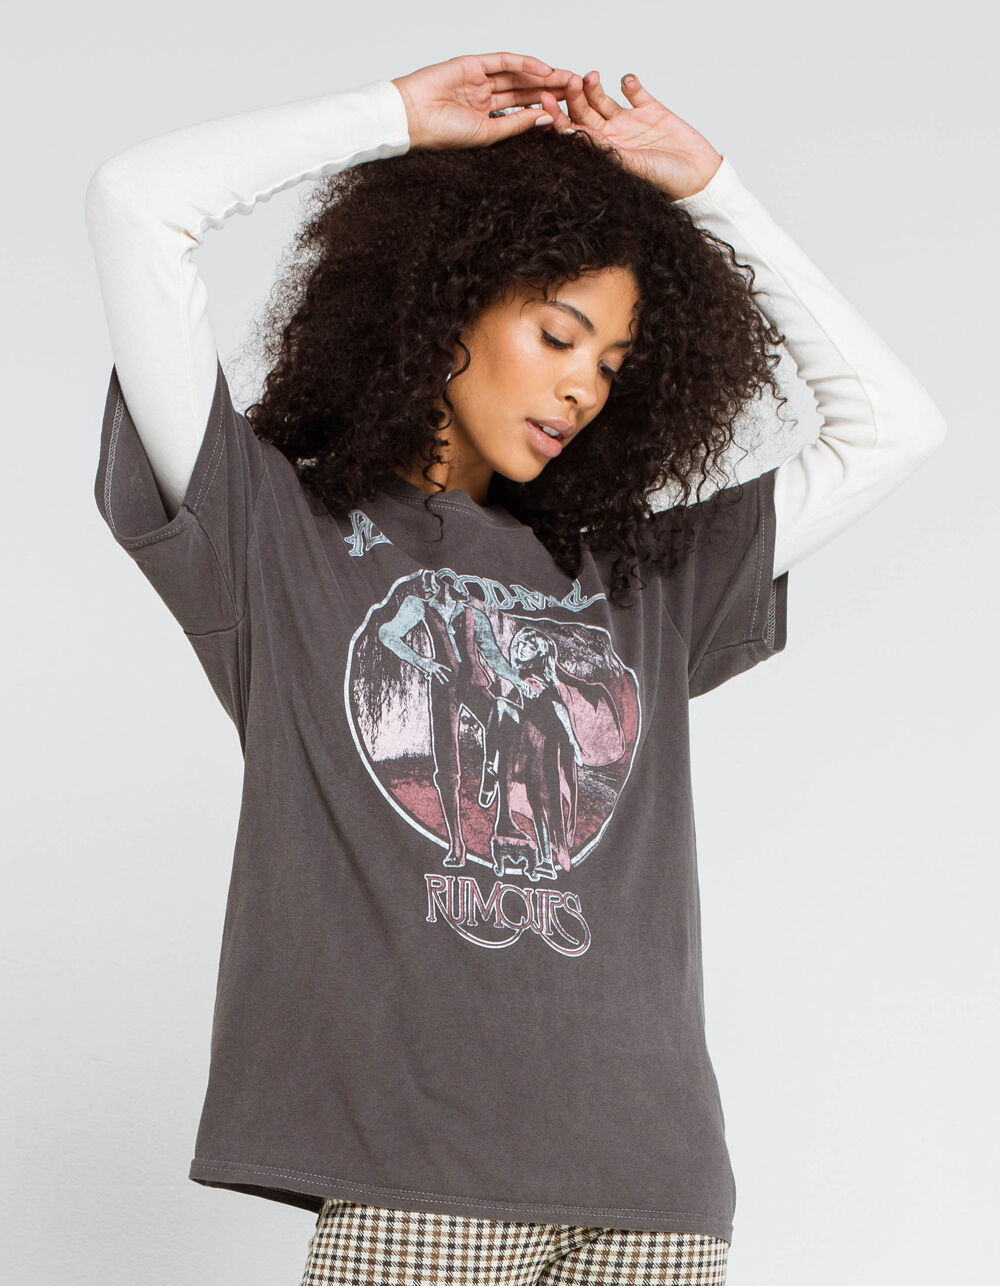 Grey Fleetwood Mac Oversized T-Shirt